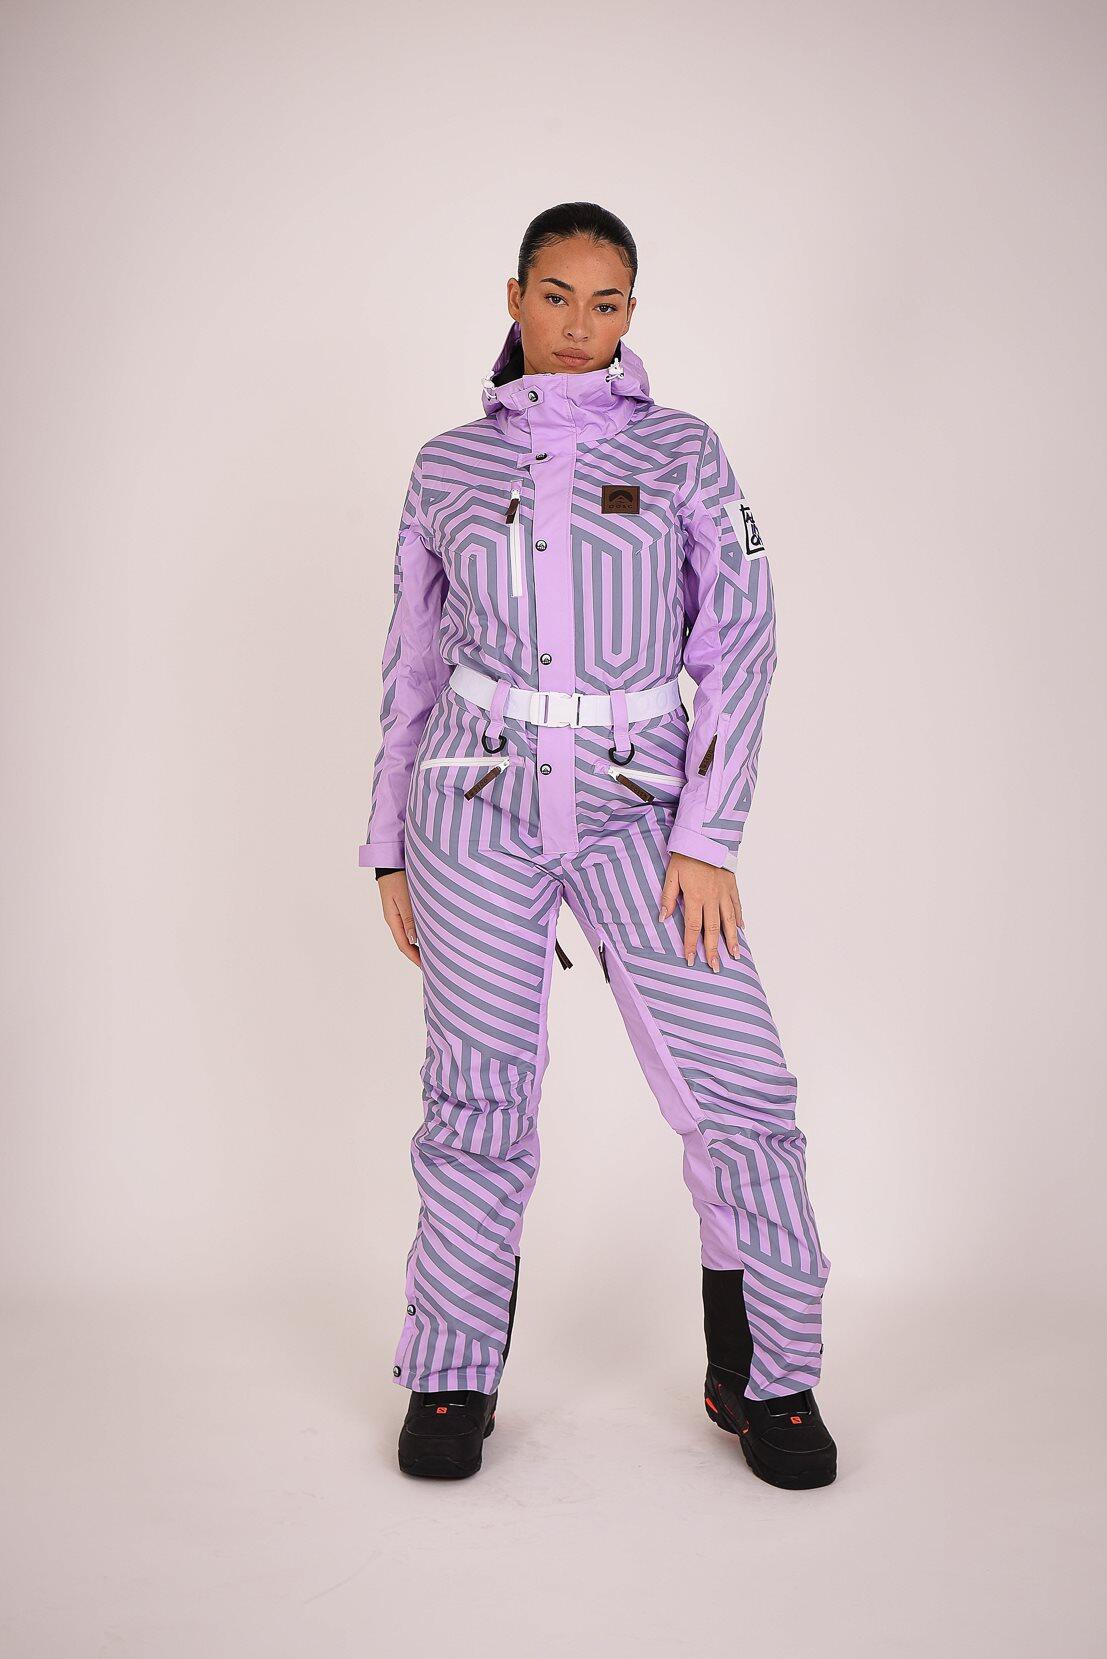 OOSC Fall Line Purple & Grey Curved Female Ski Suit